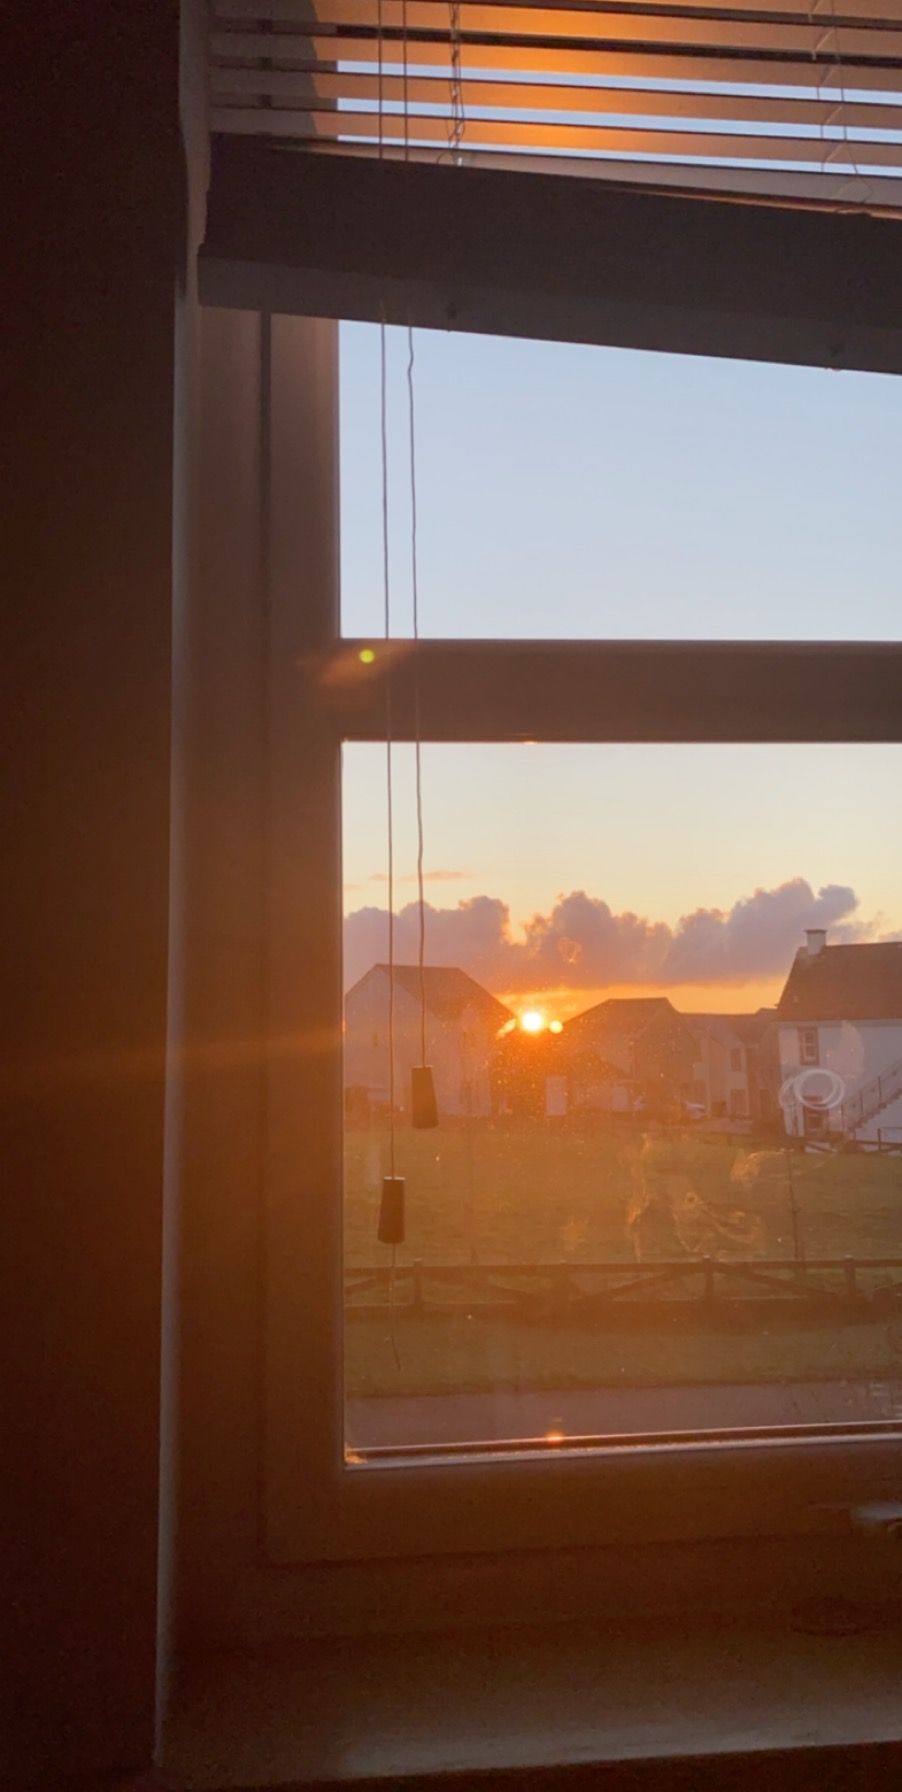 Sunset through the window - Sunrise